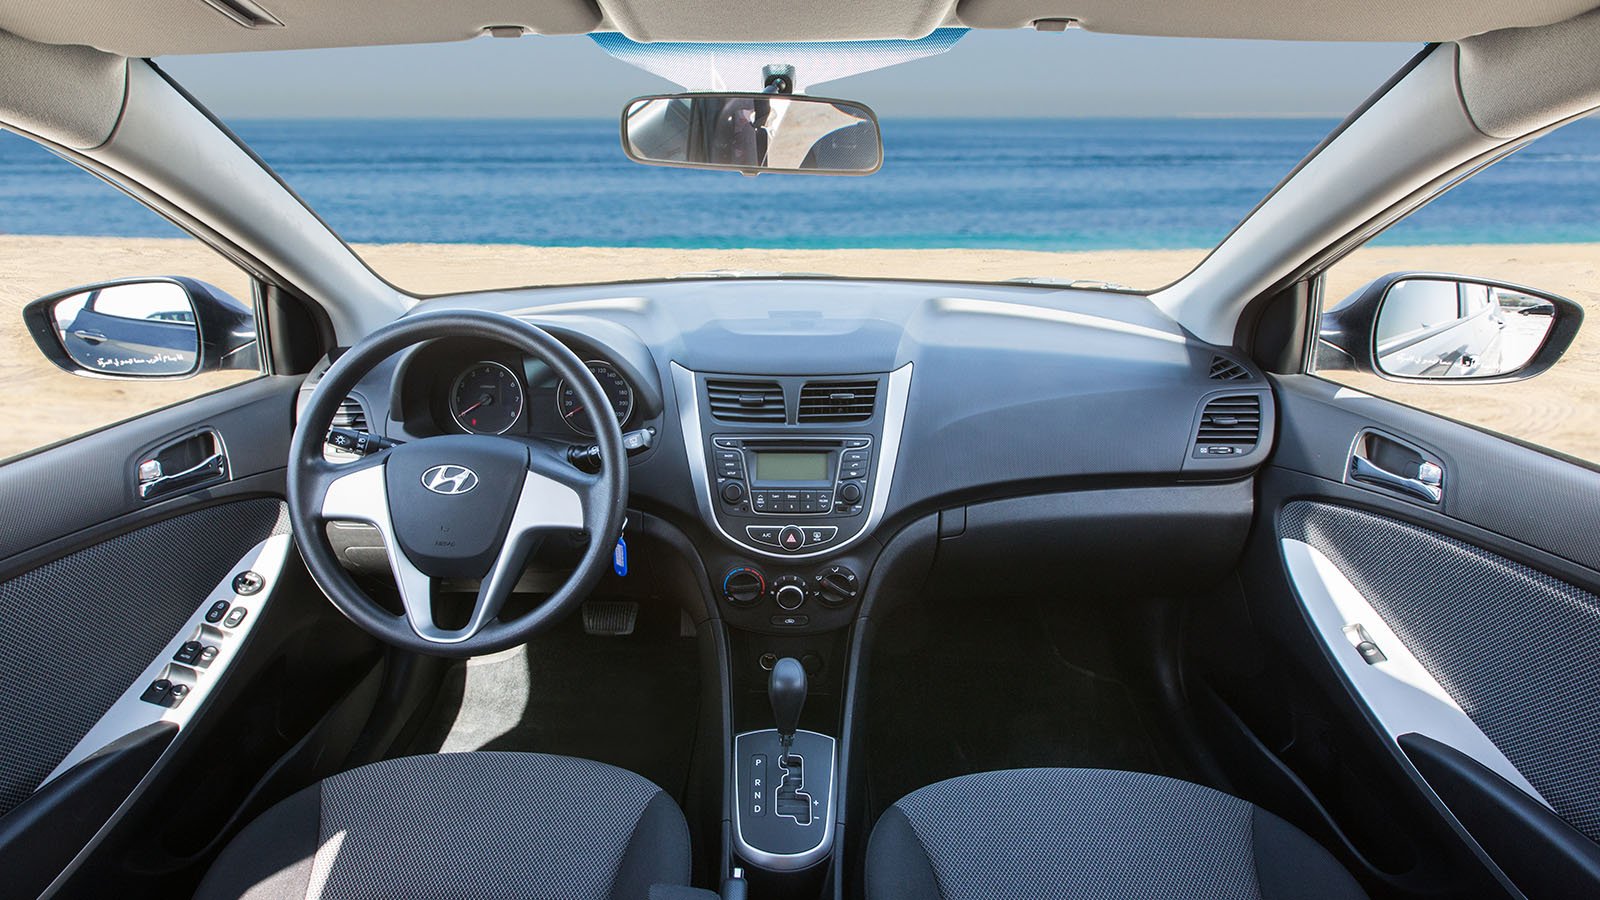 Hyundai Accent Hatchback Rental Car Dubai